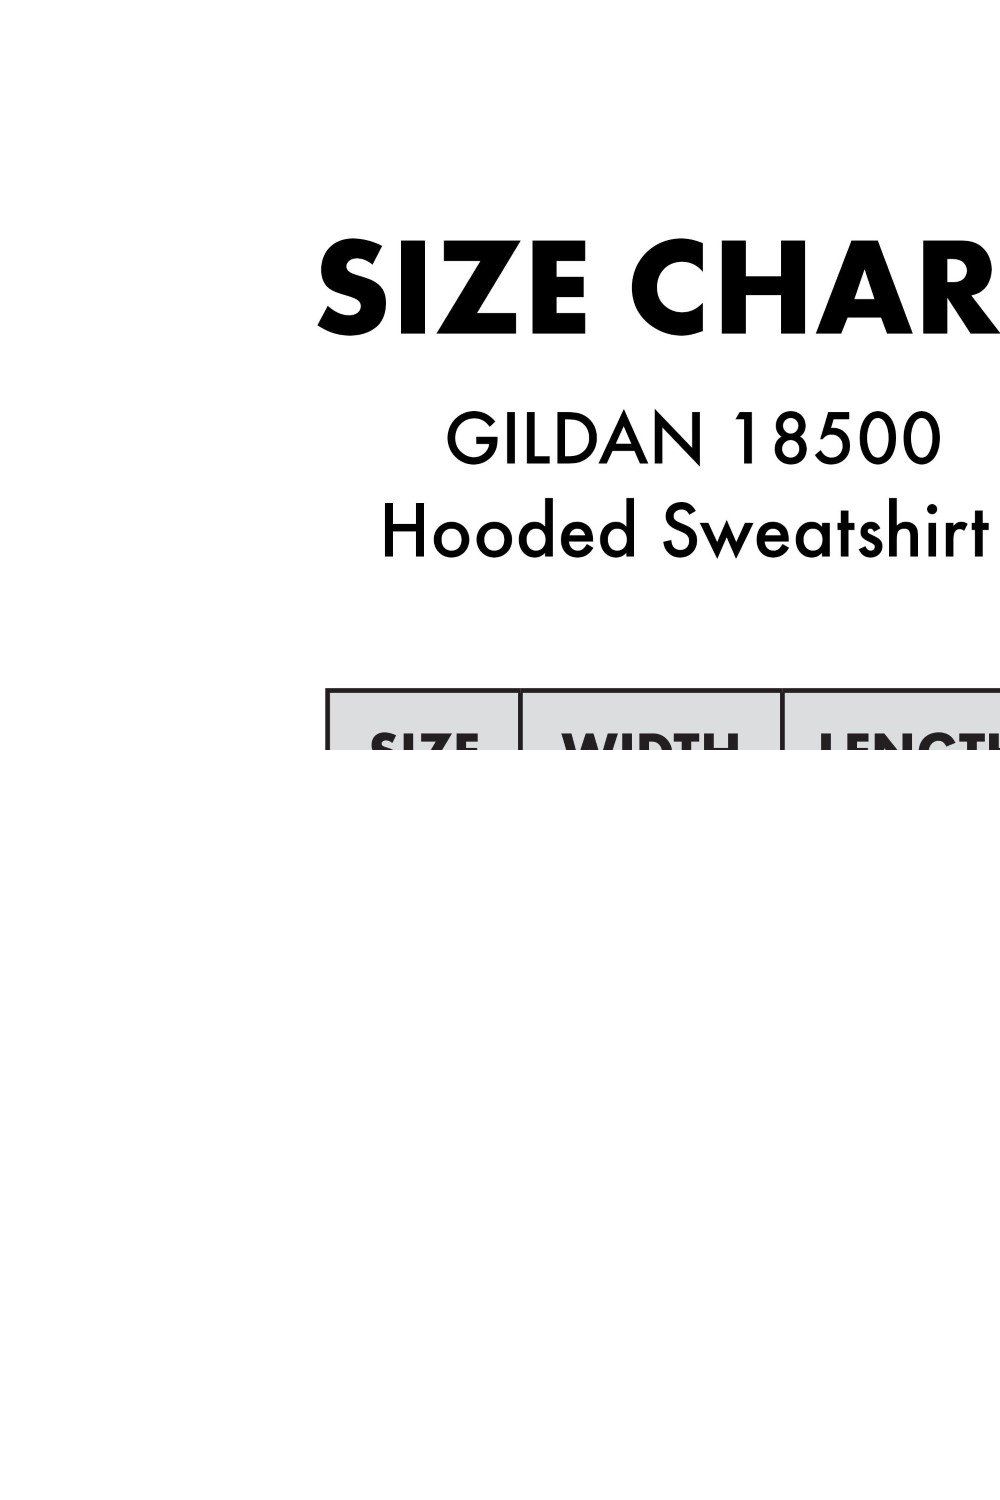 Gildan 18500 Hoodie Size Chart Etsy pinterest preview image.